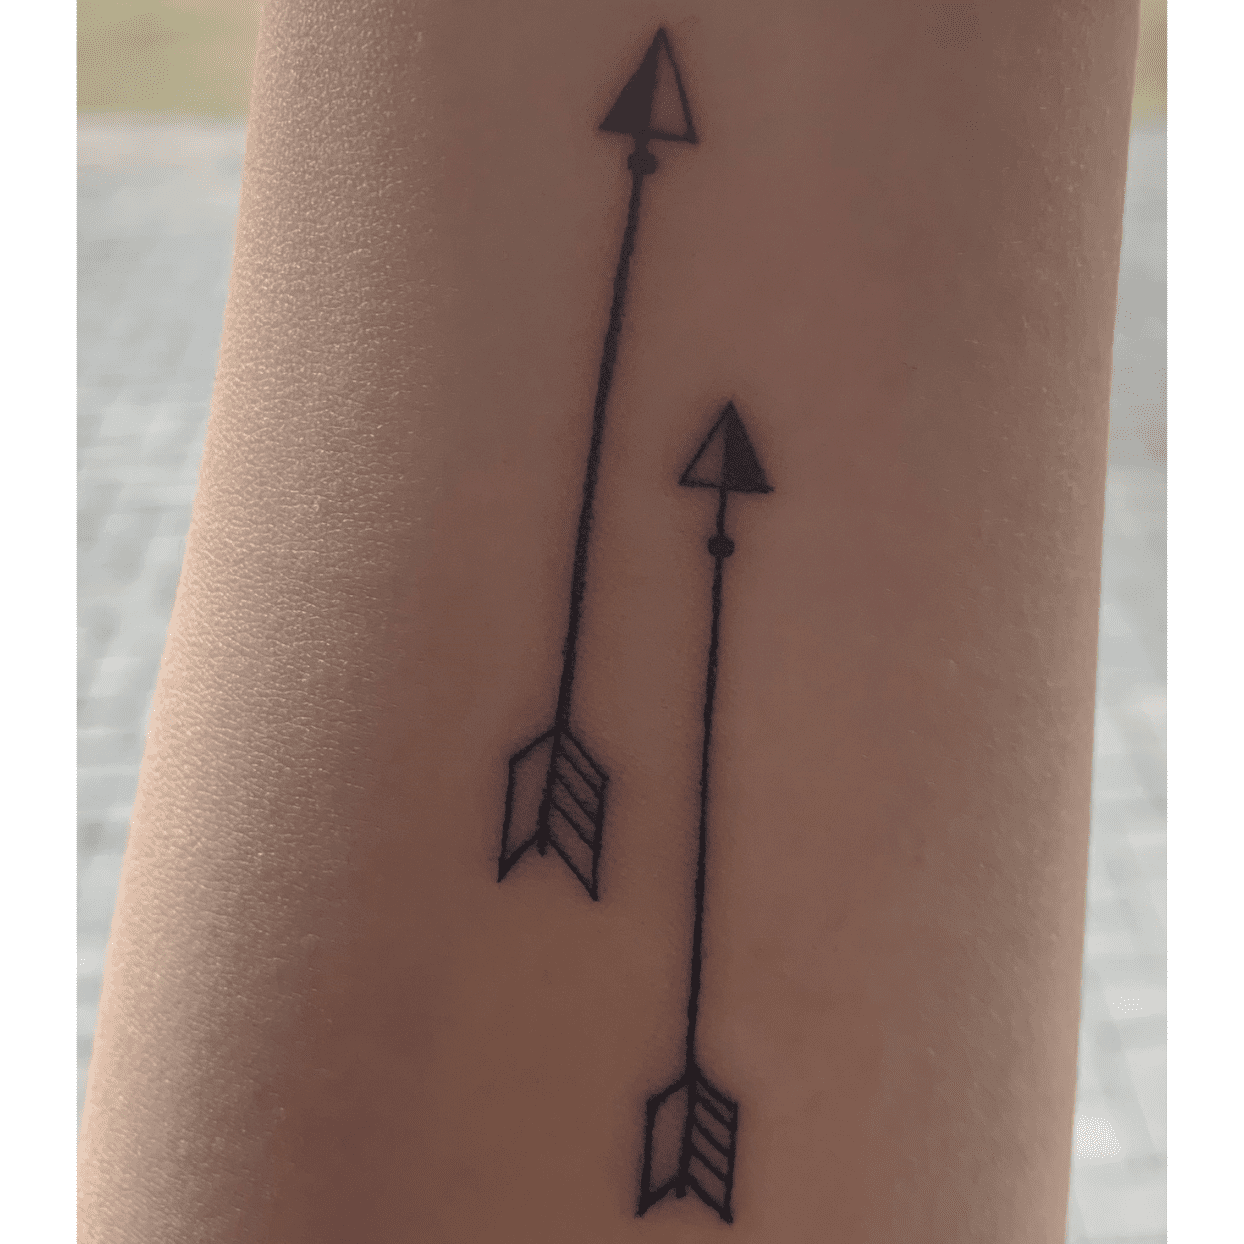 female wrist with two arrow tattoos pointing forward